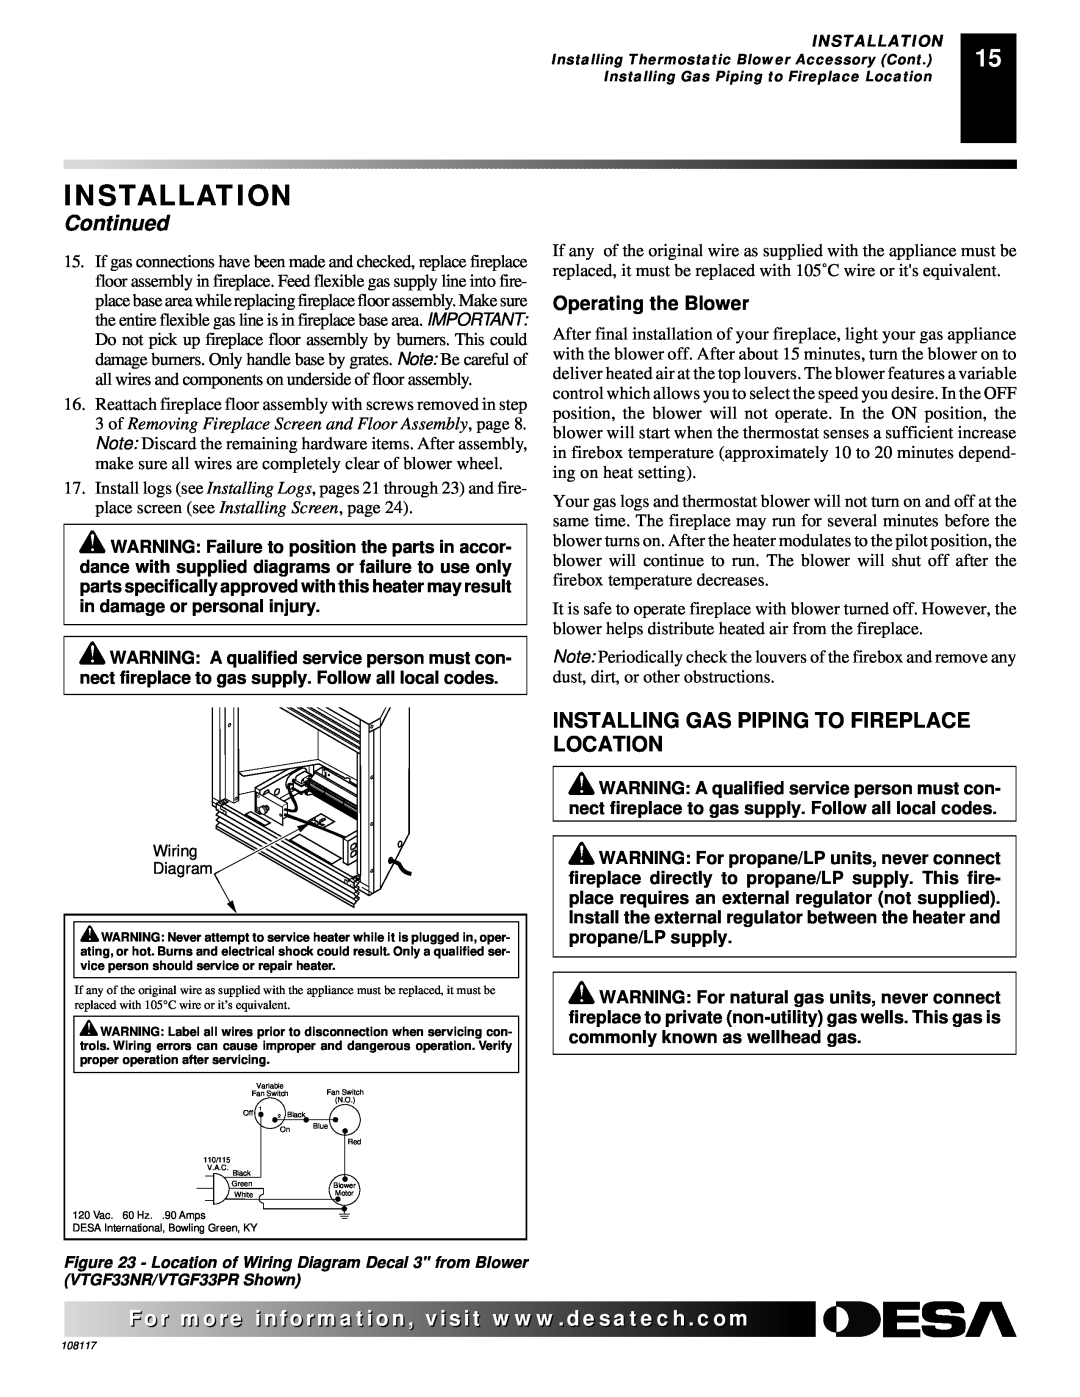 Desa VTGF33NR, VTGF33PR, CGEFP33PR installation manual Installing Gas Piping To Fireplace Location, Installation, Continued 